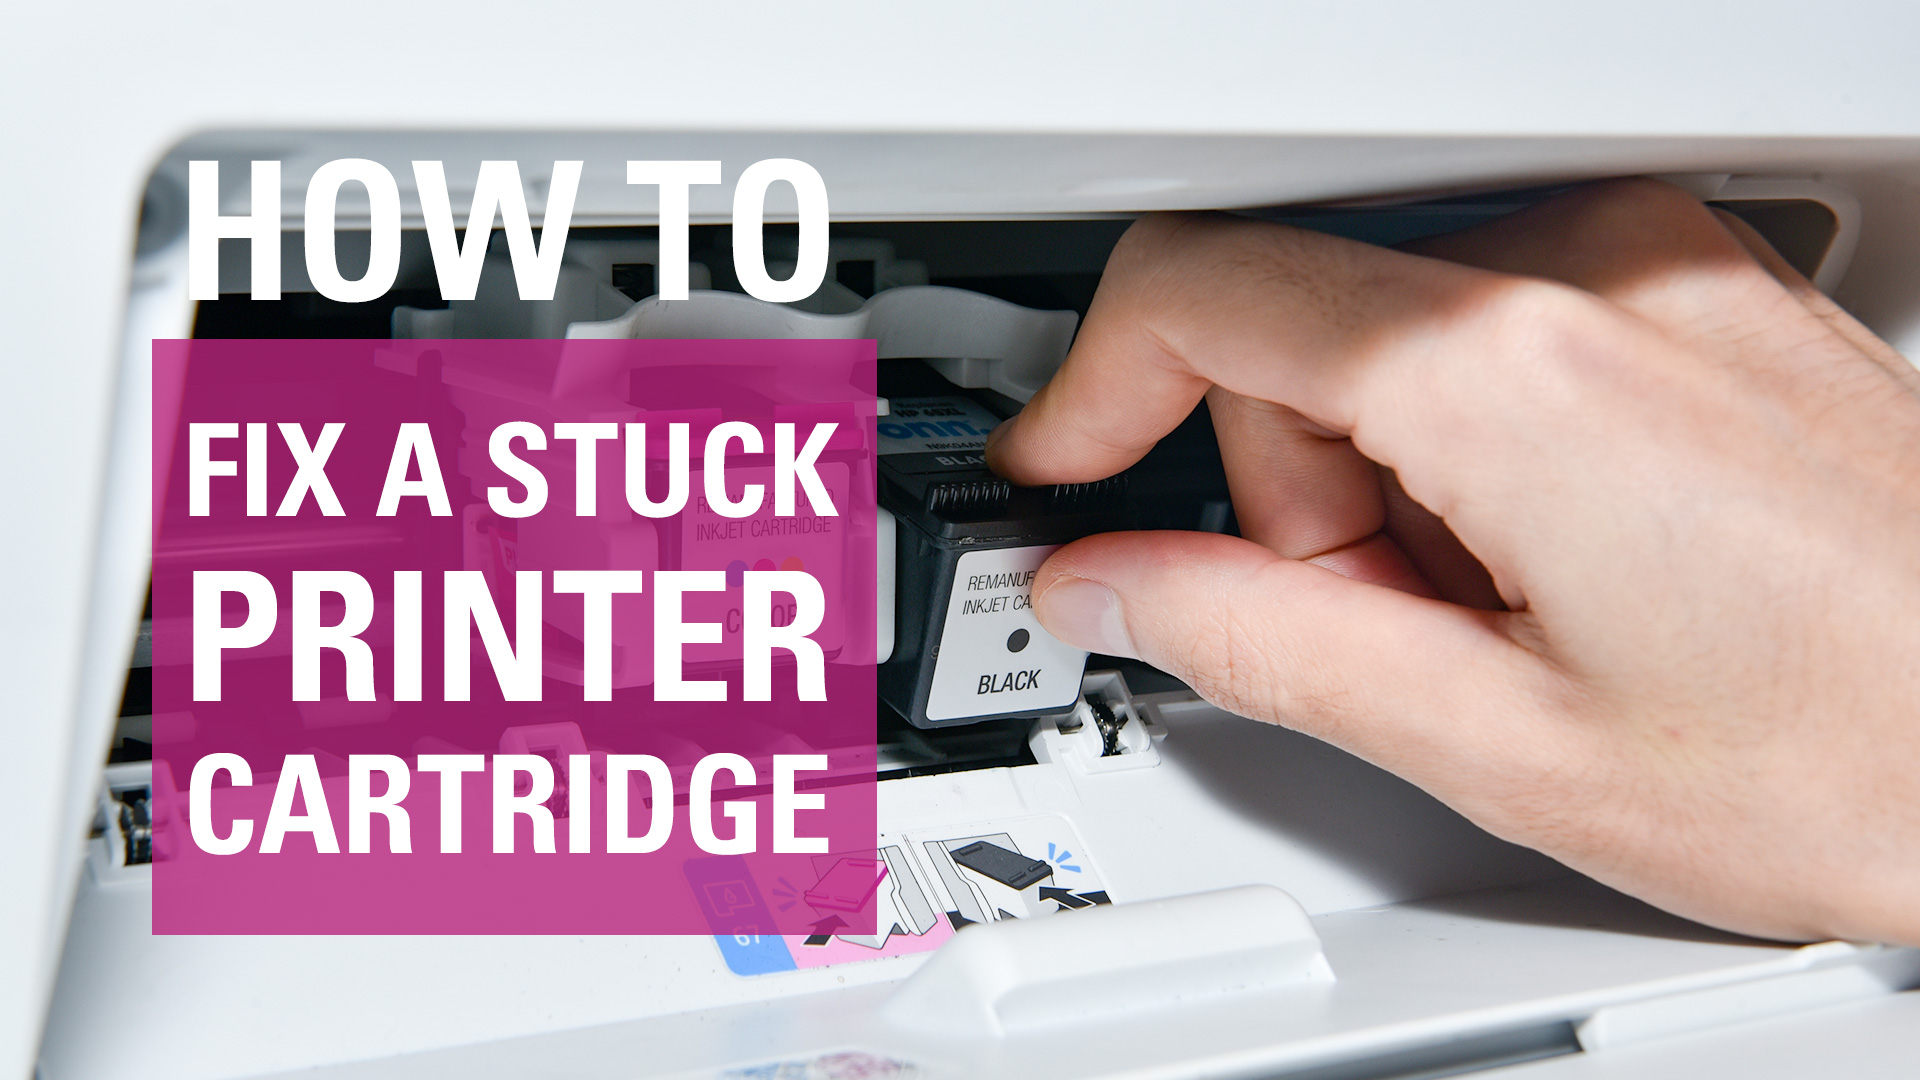 How to Fix A Stuck Printer Cartridge